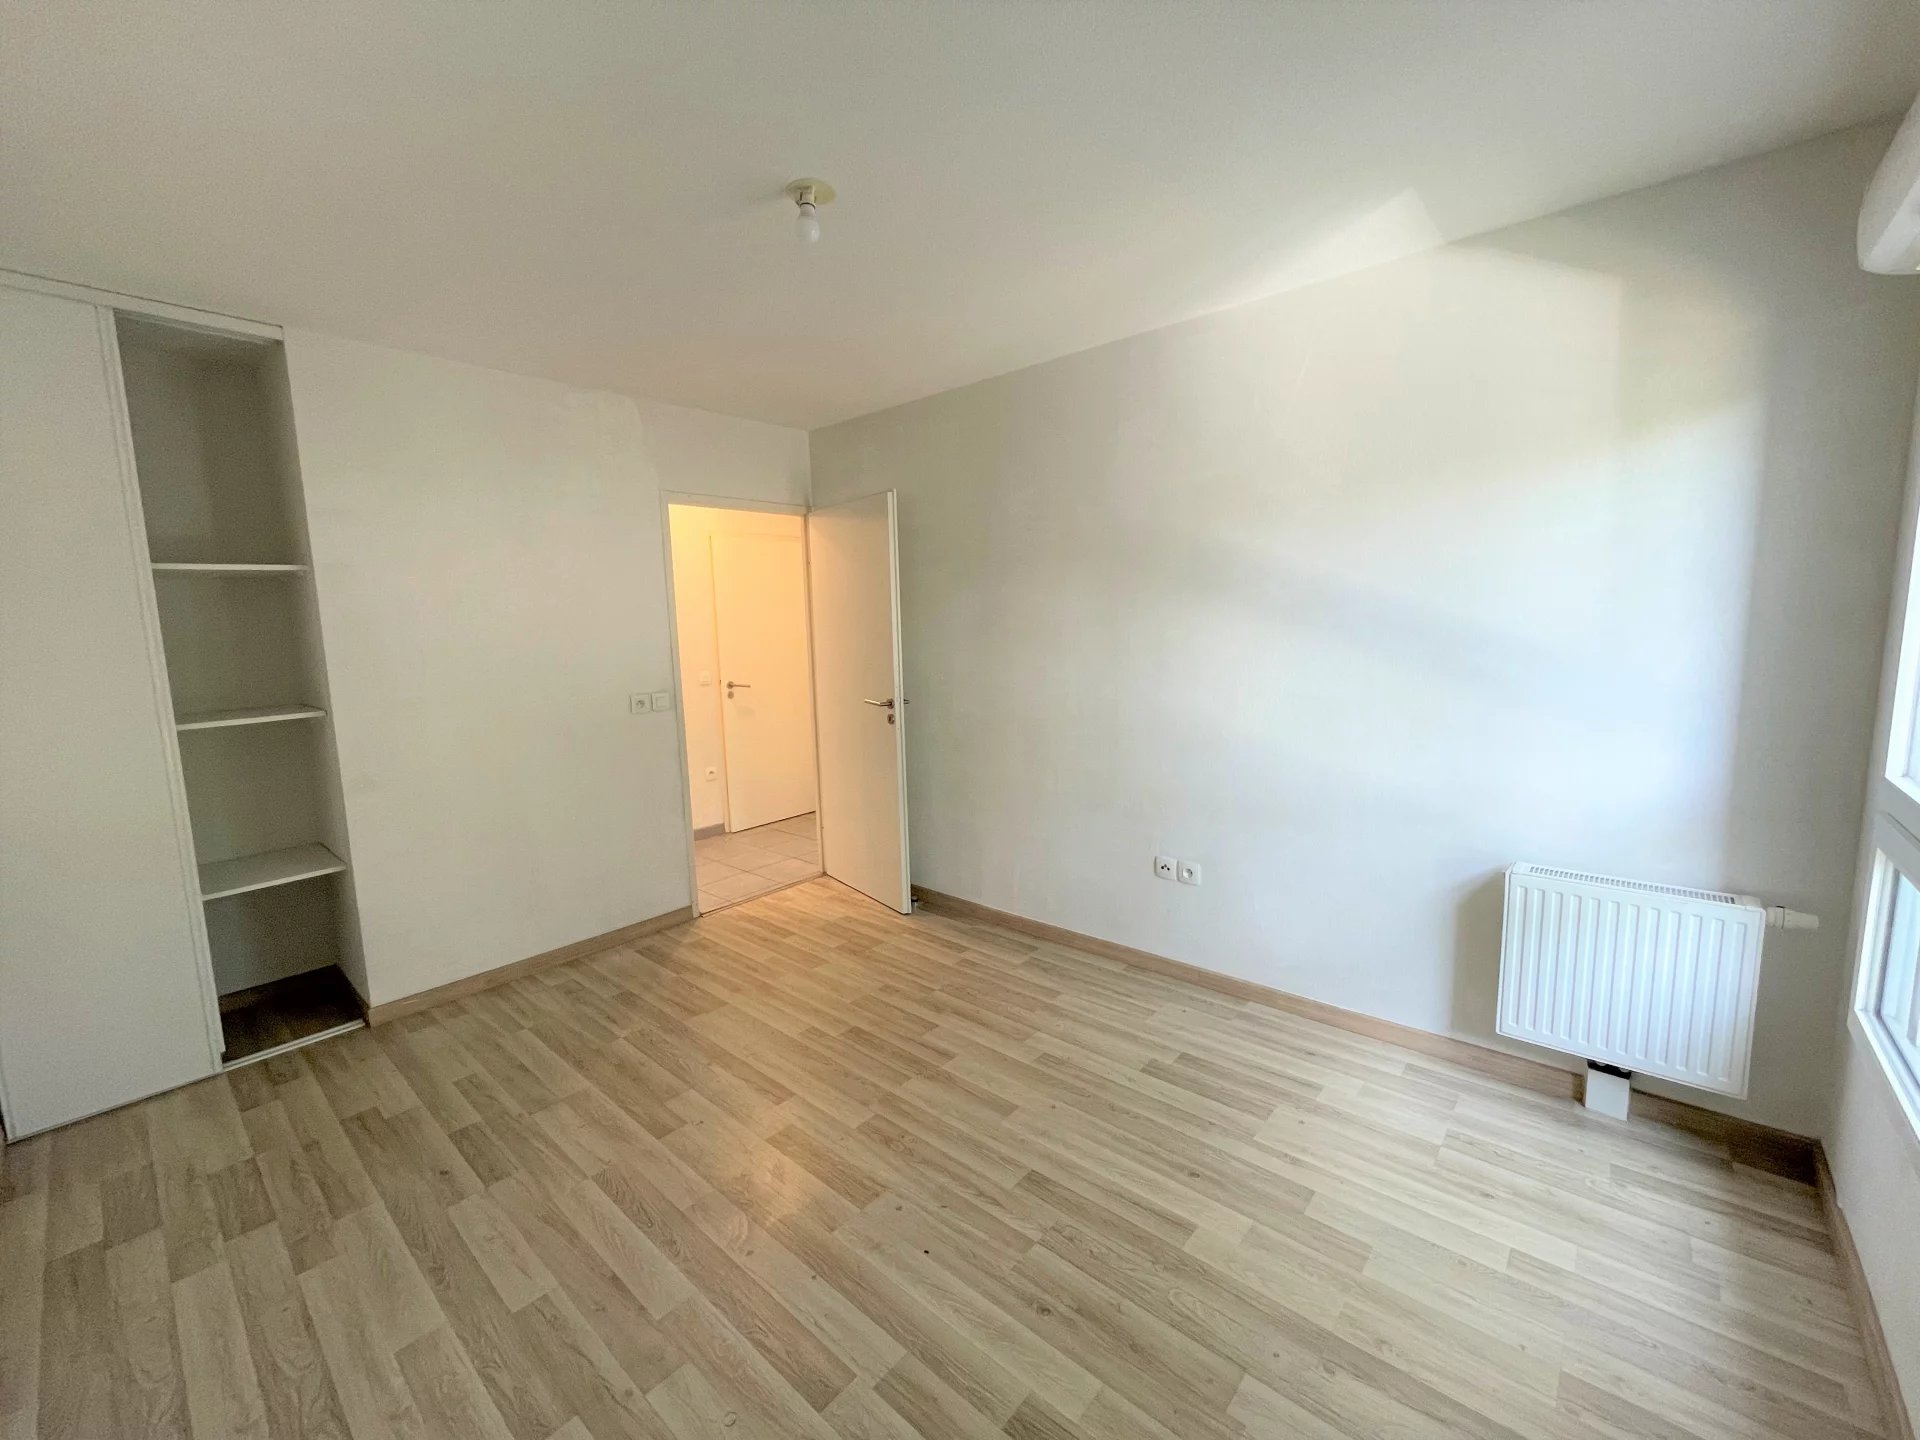 Sale Apartment - Bruges